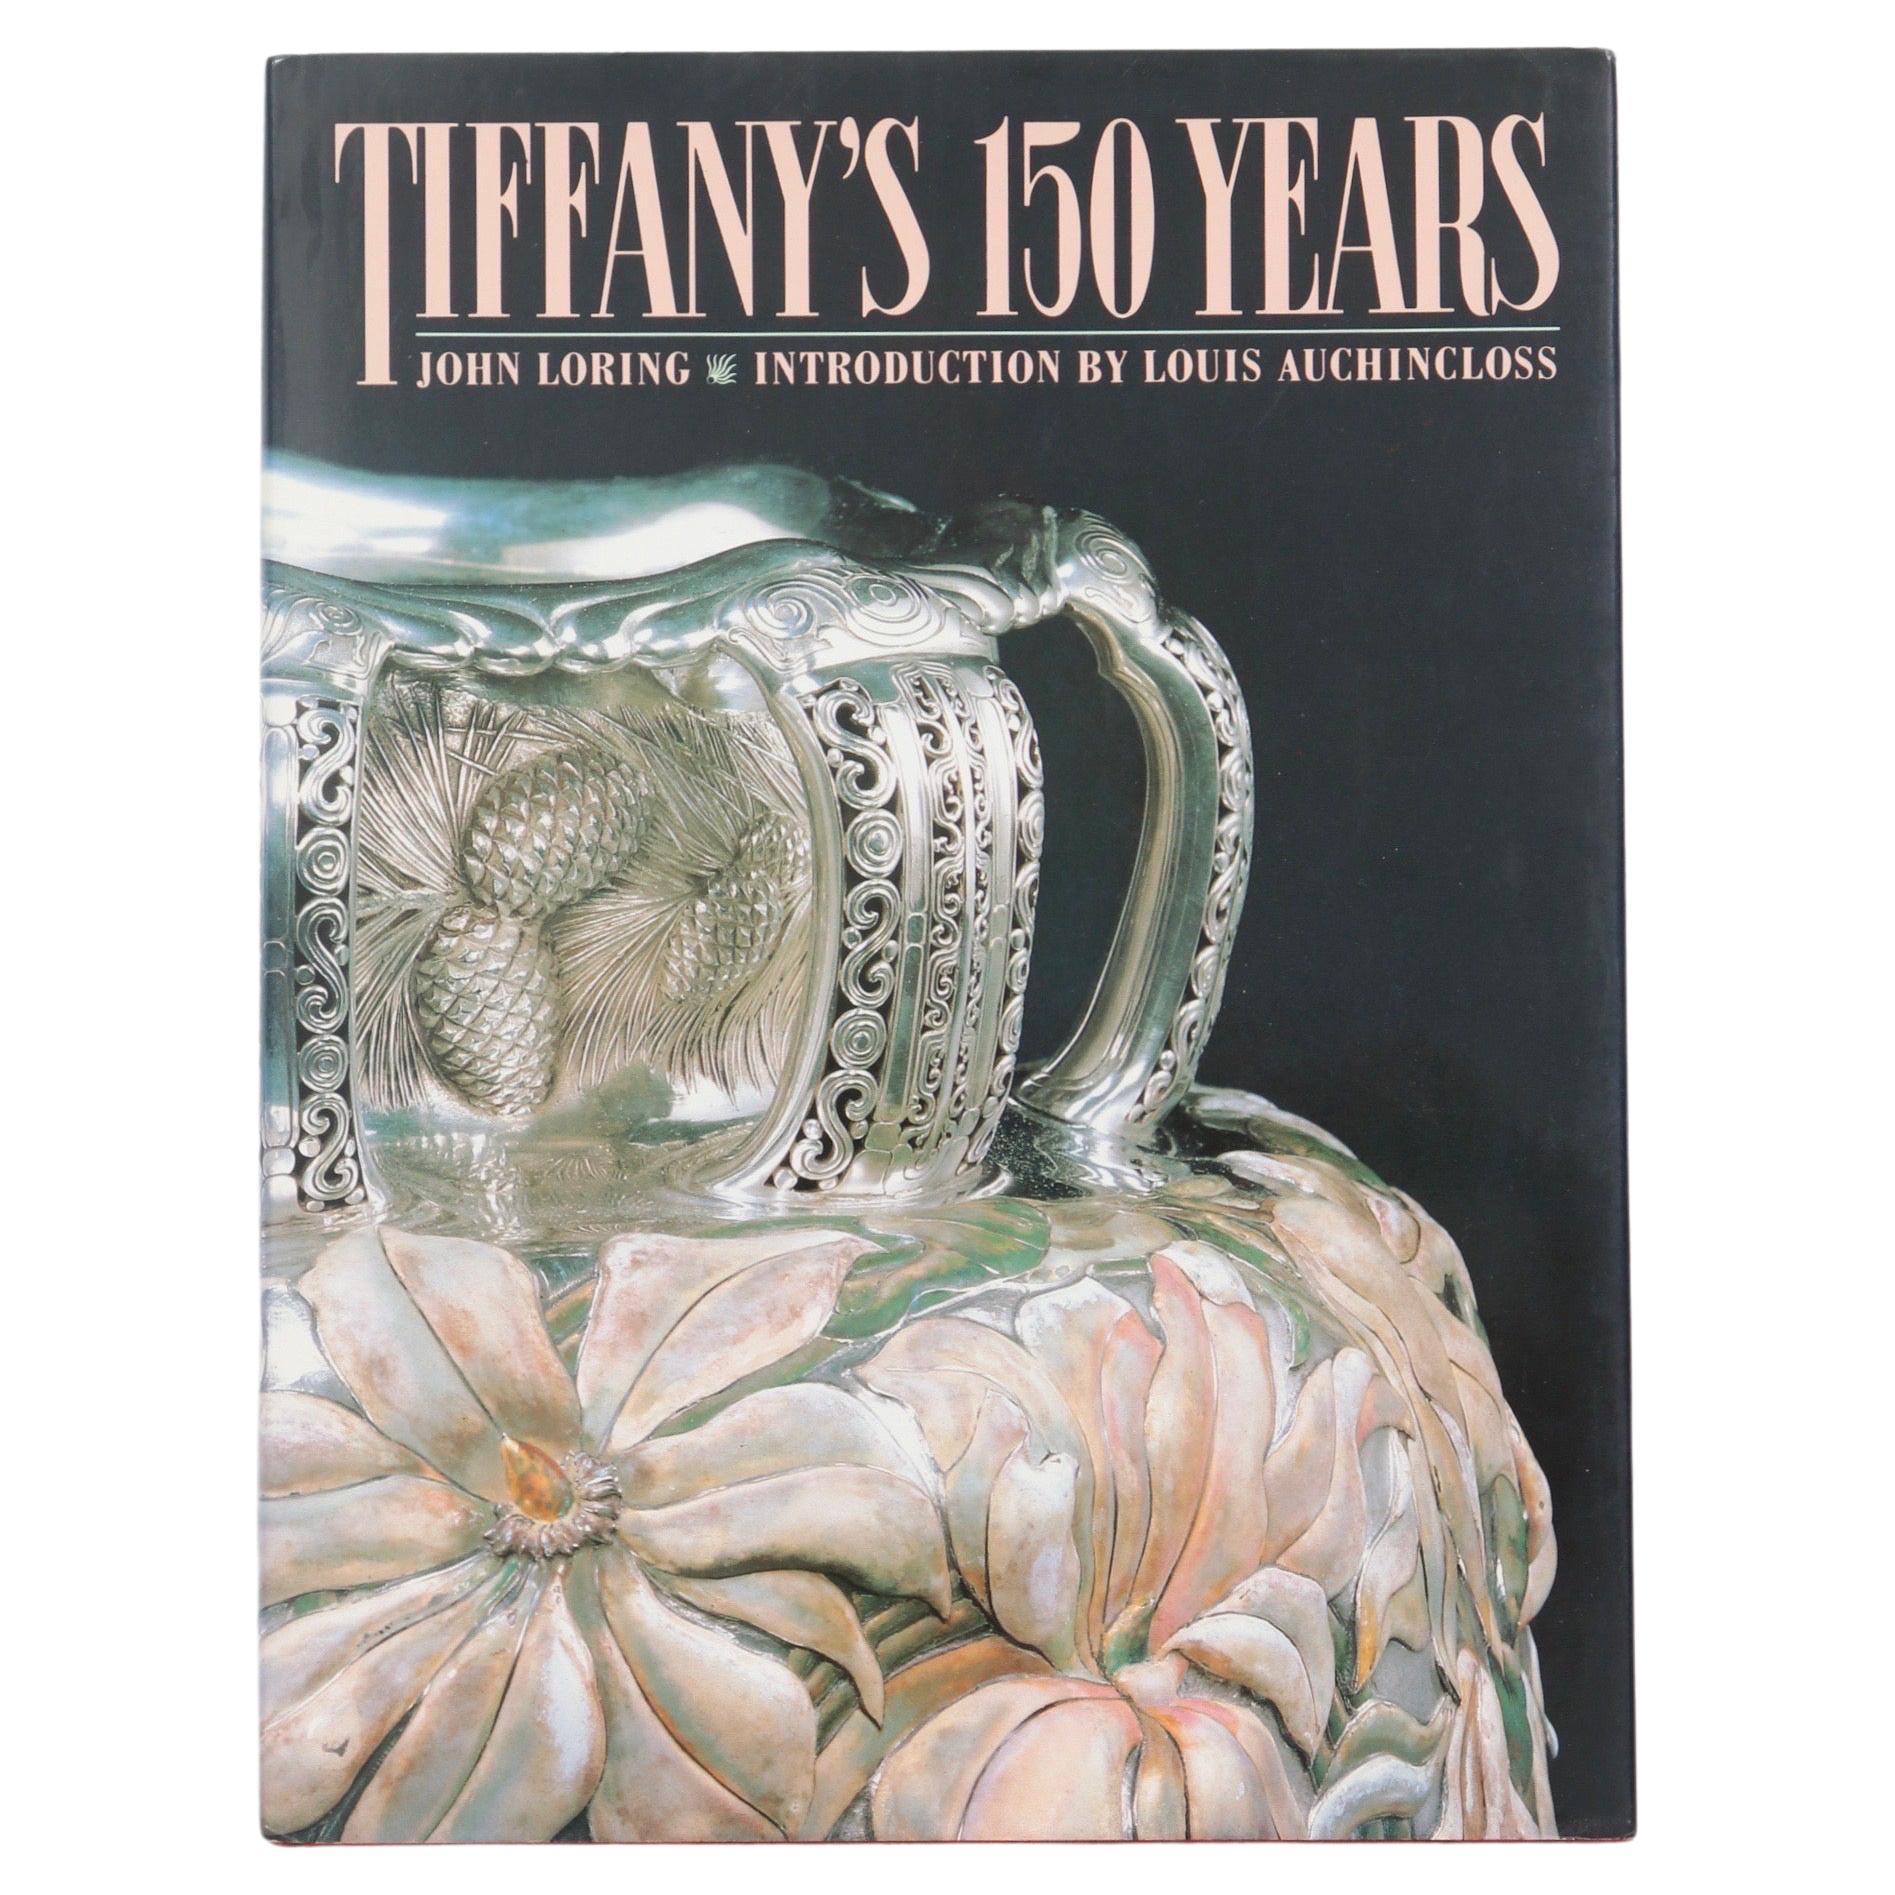 Tiffany's 150 Years by John Loring